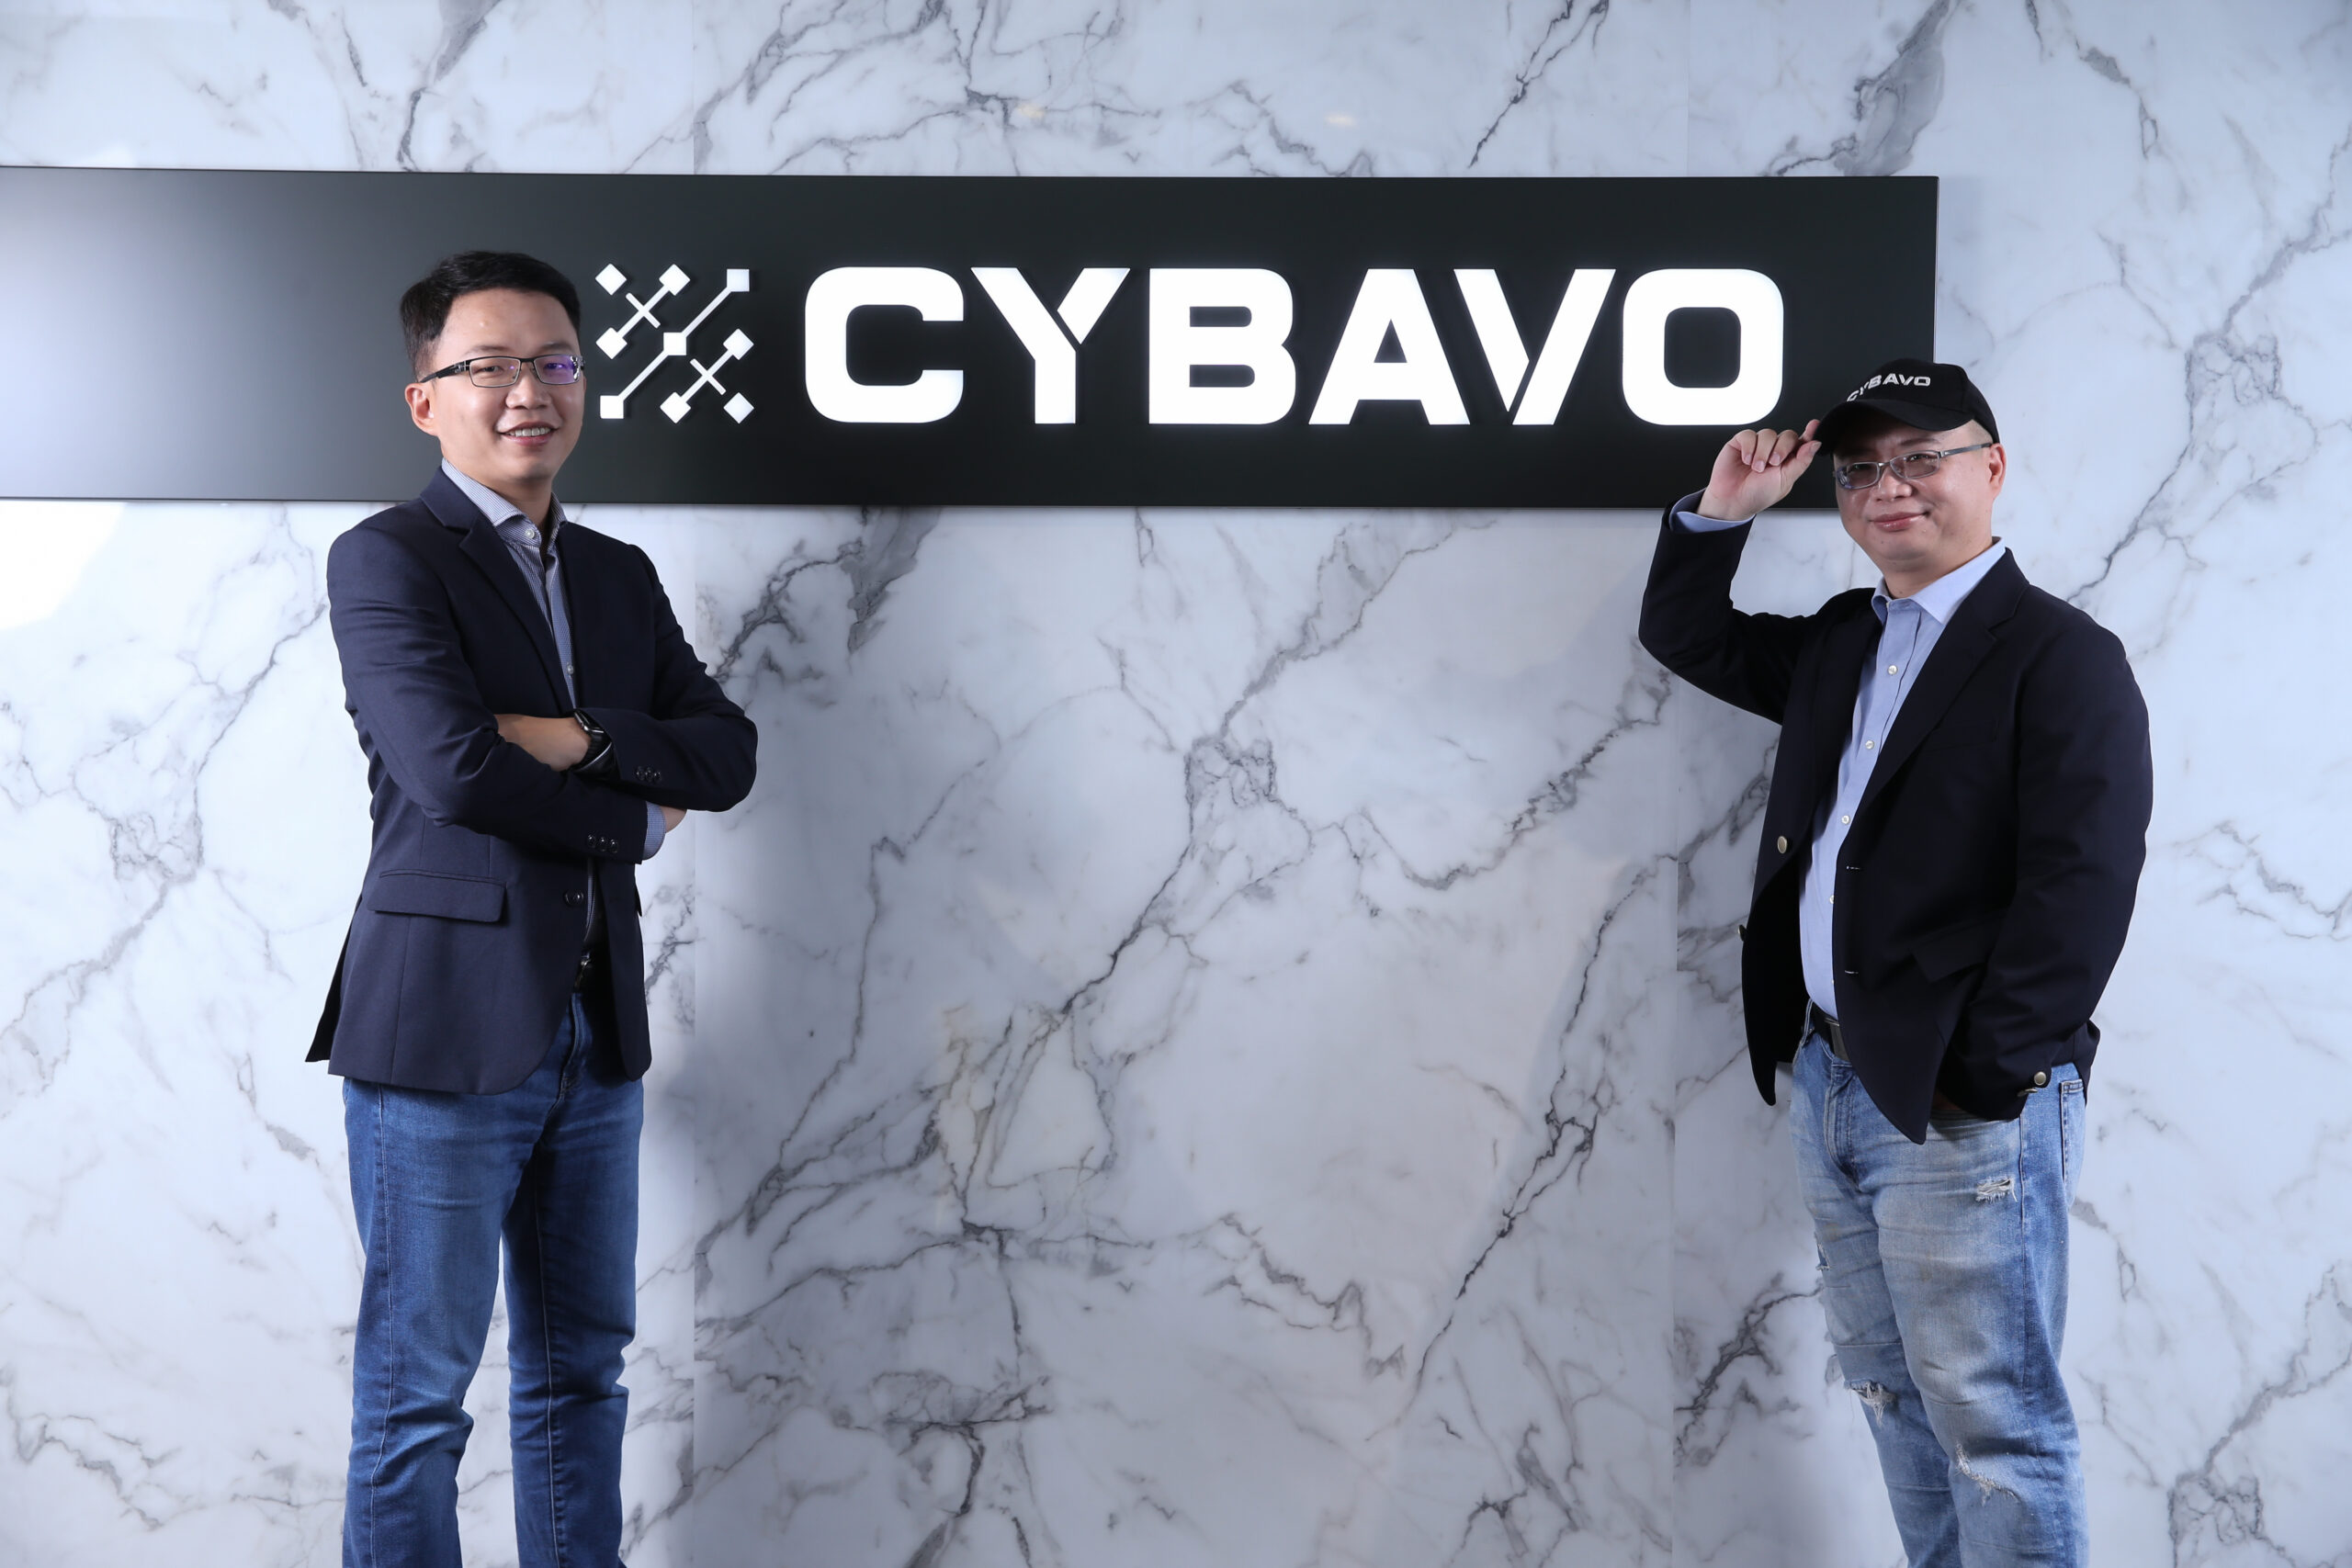 CYBAVO Delivers Crypto Asset Management Solutions for Enterprises